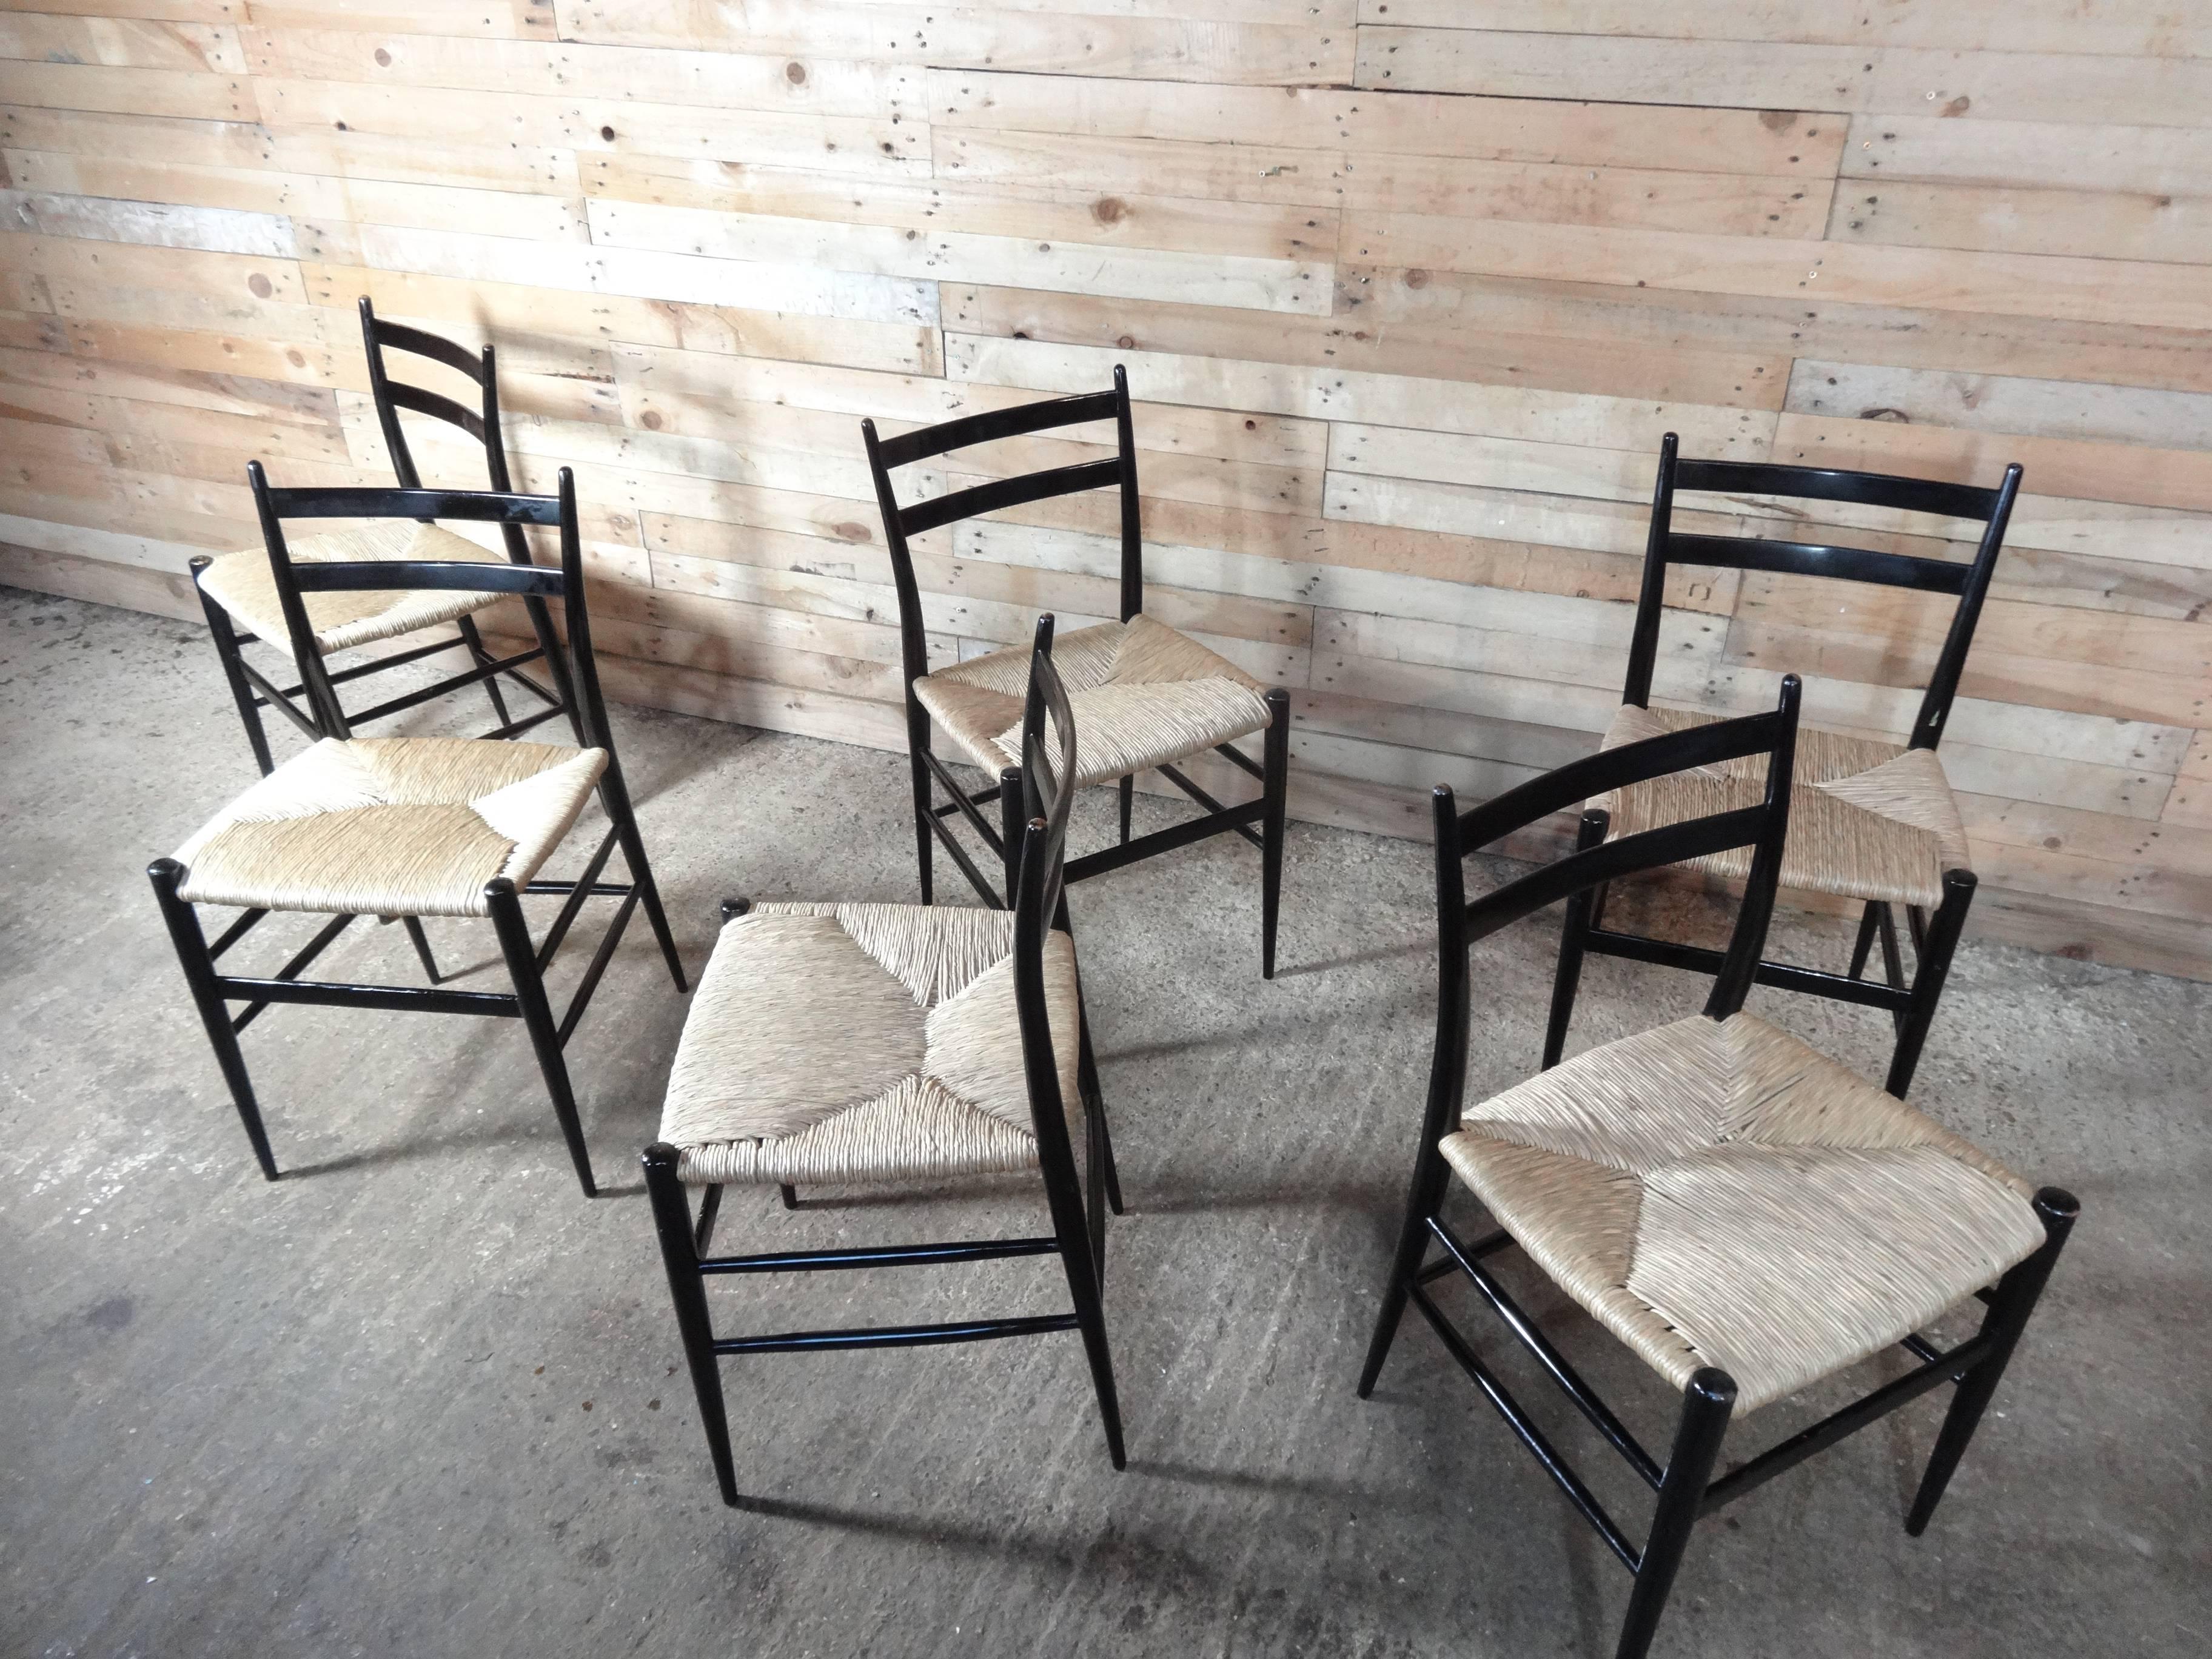 20th Century Six Ebonized Mid-Century Modern Chairs Attributed to Gio Ponti, Italy circa 1950